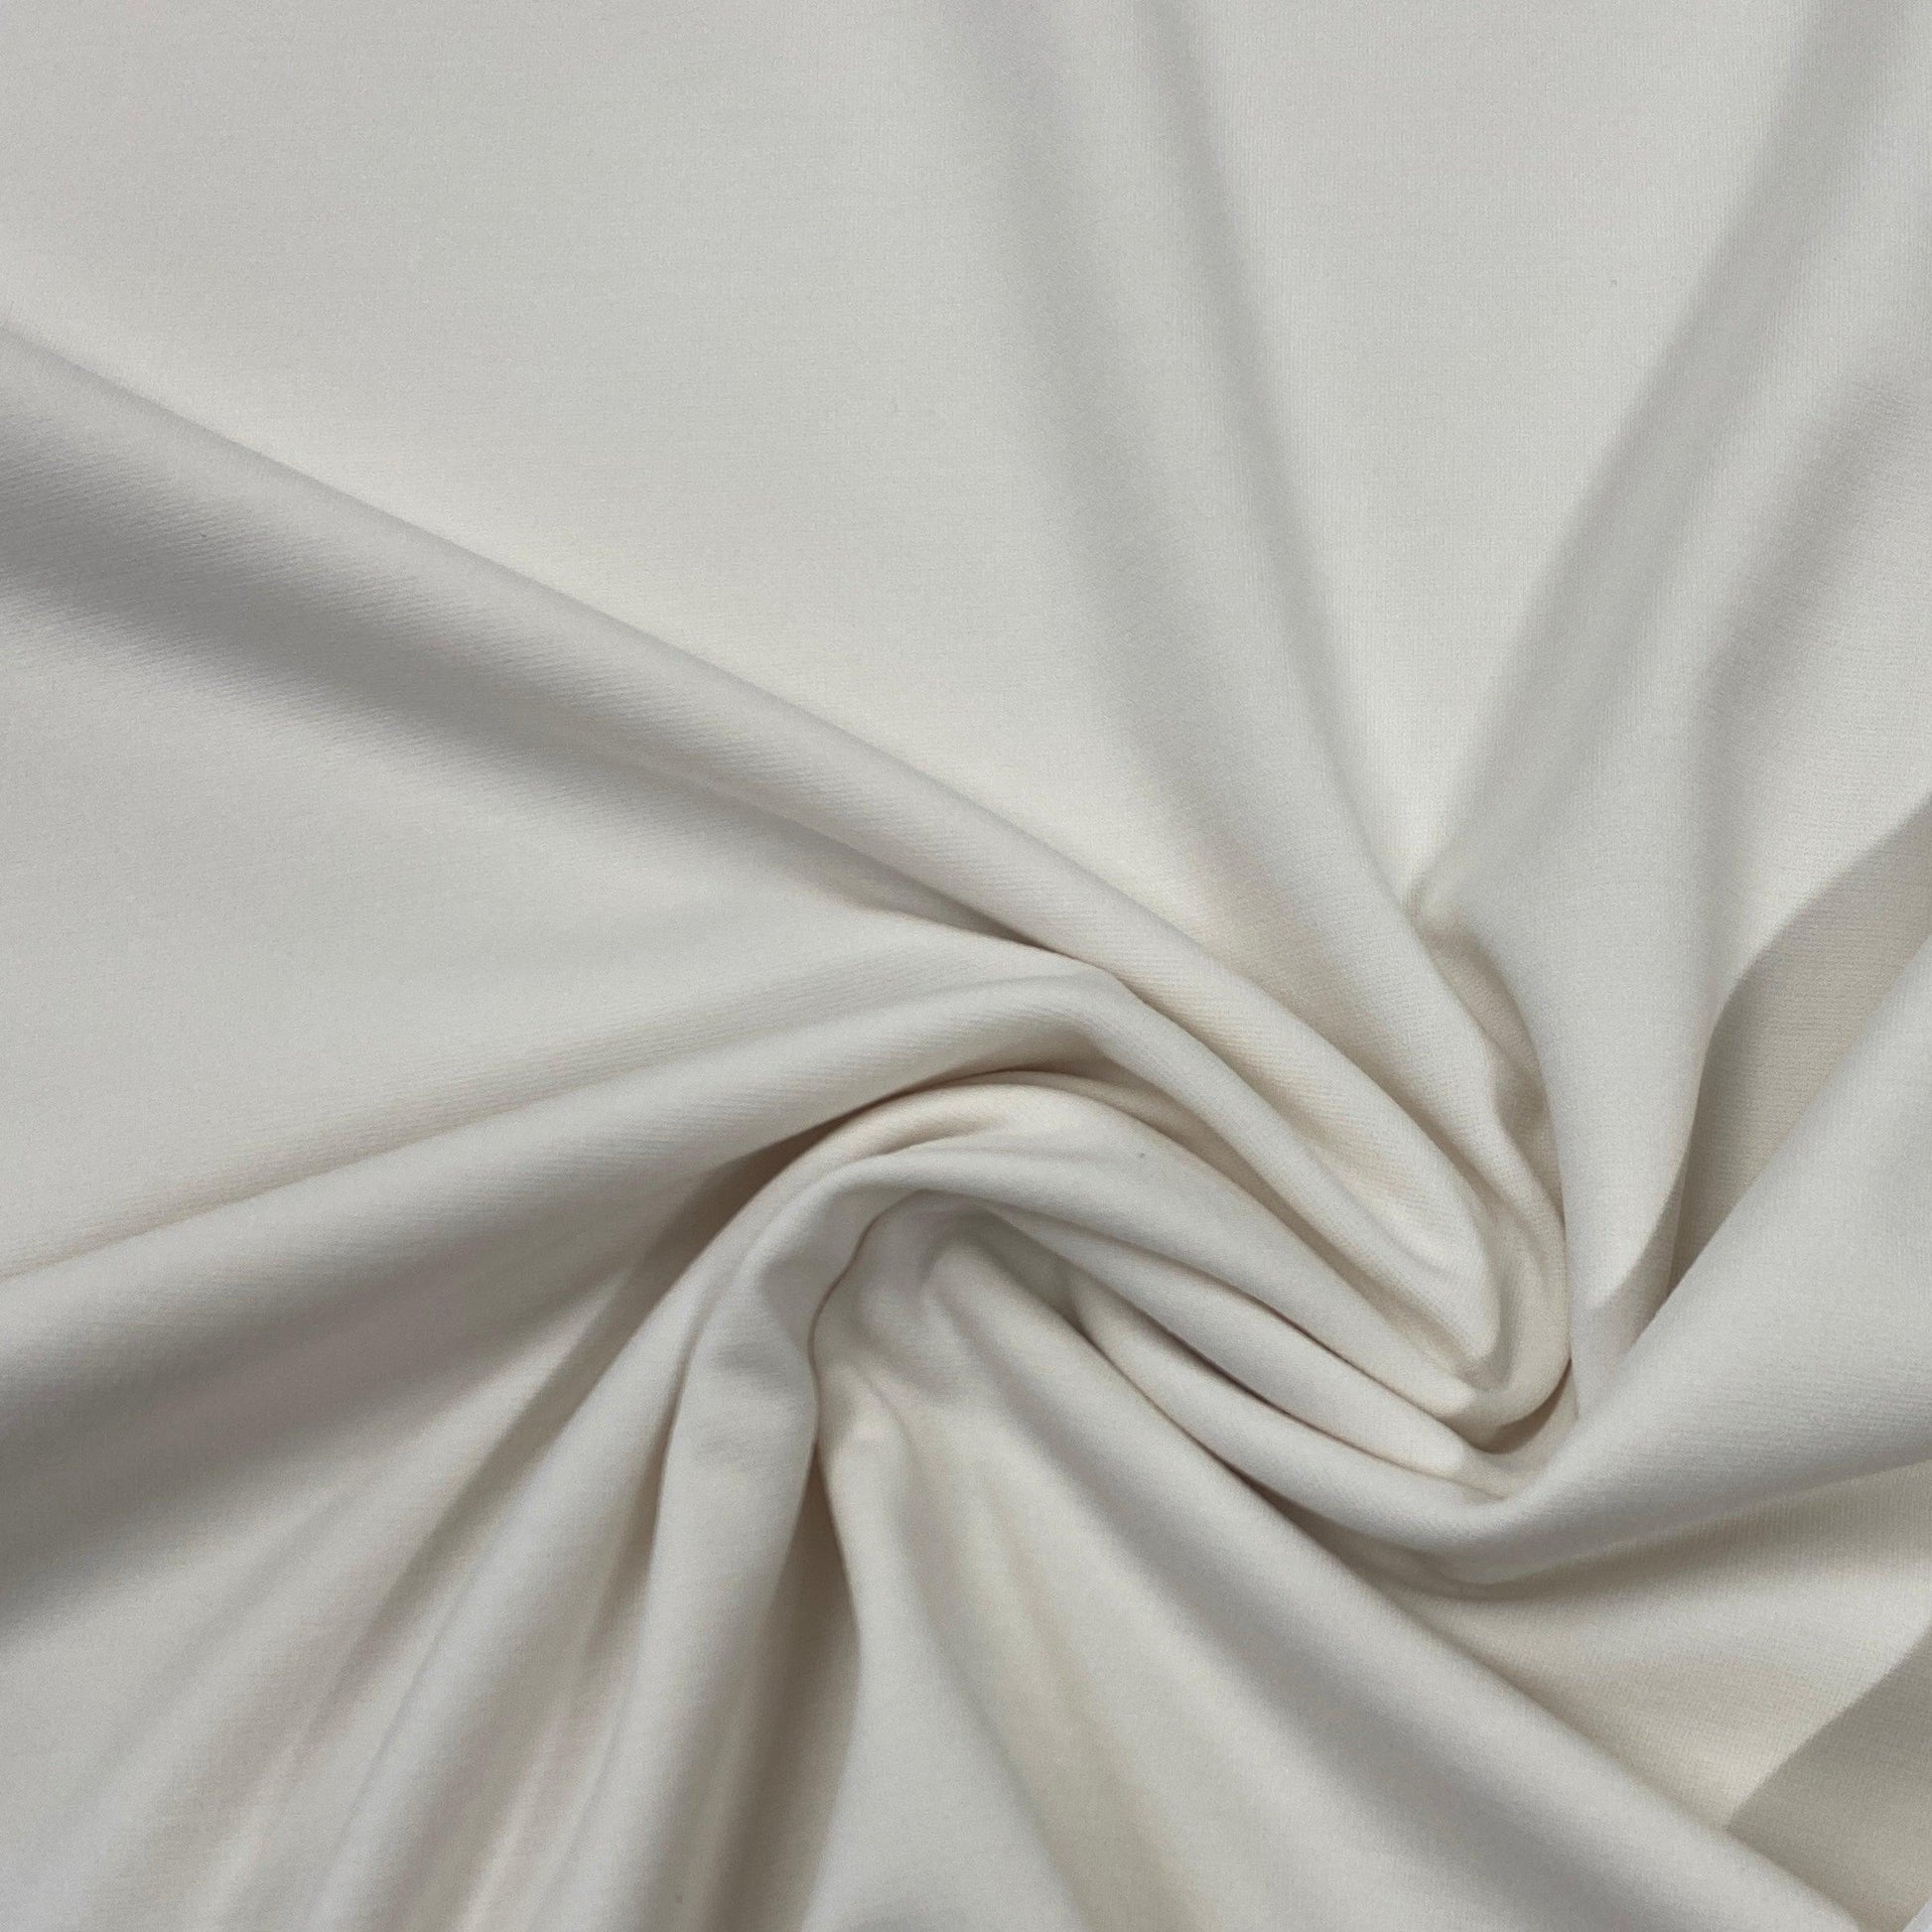 Off-White Cotton/Spandex Jersey Fabric - 240 GSM - Nature's Fabrics